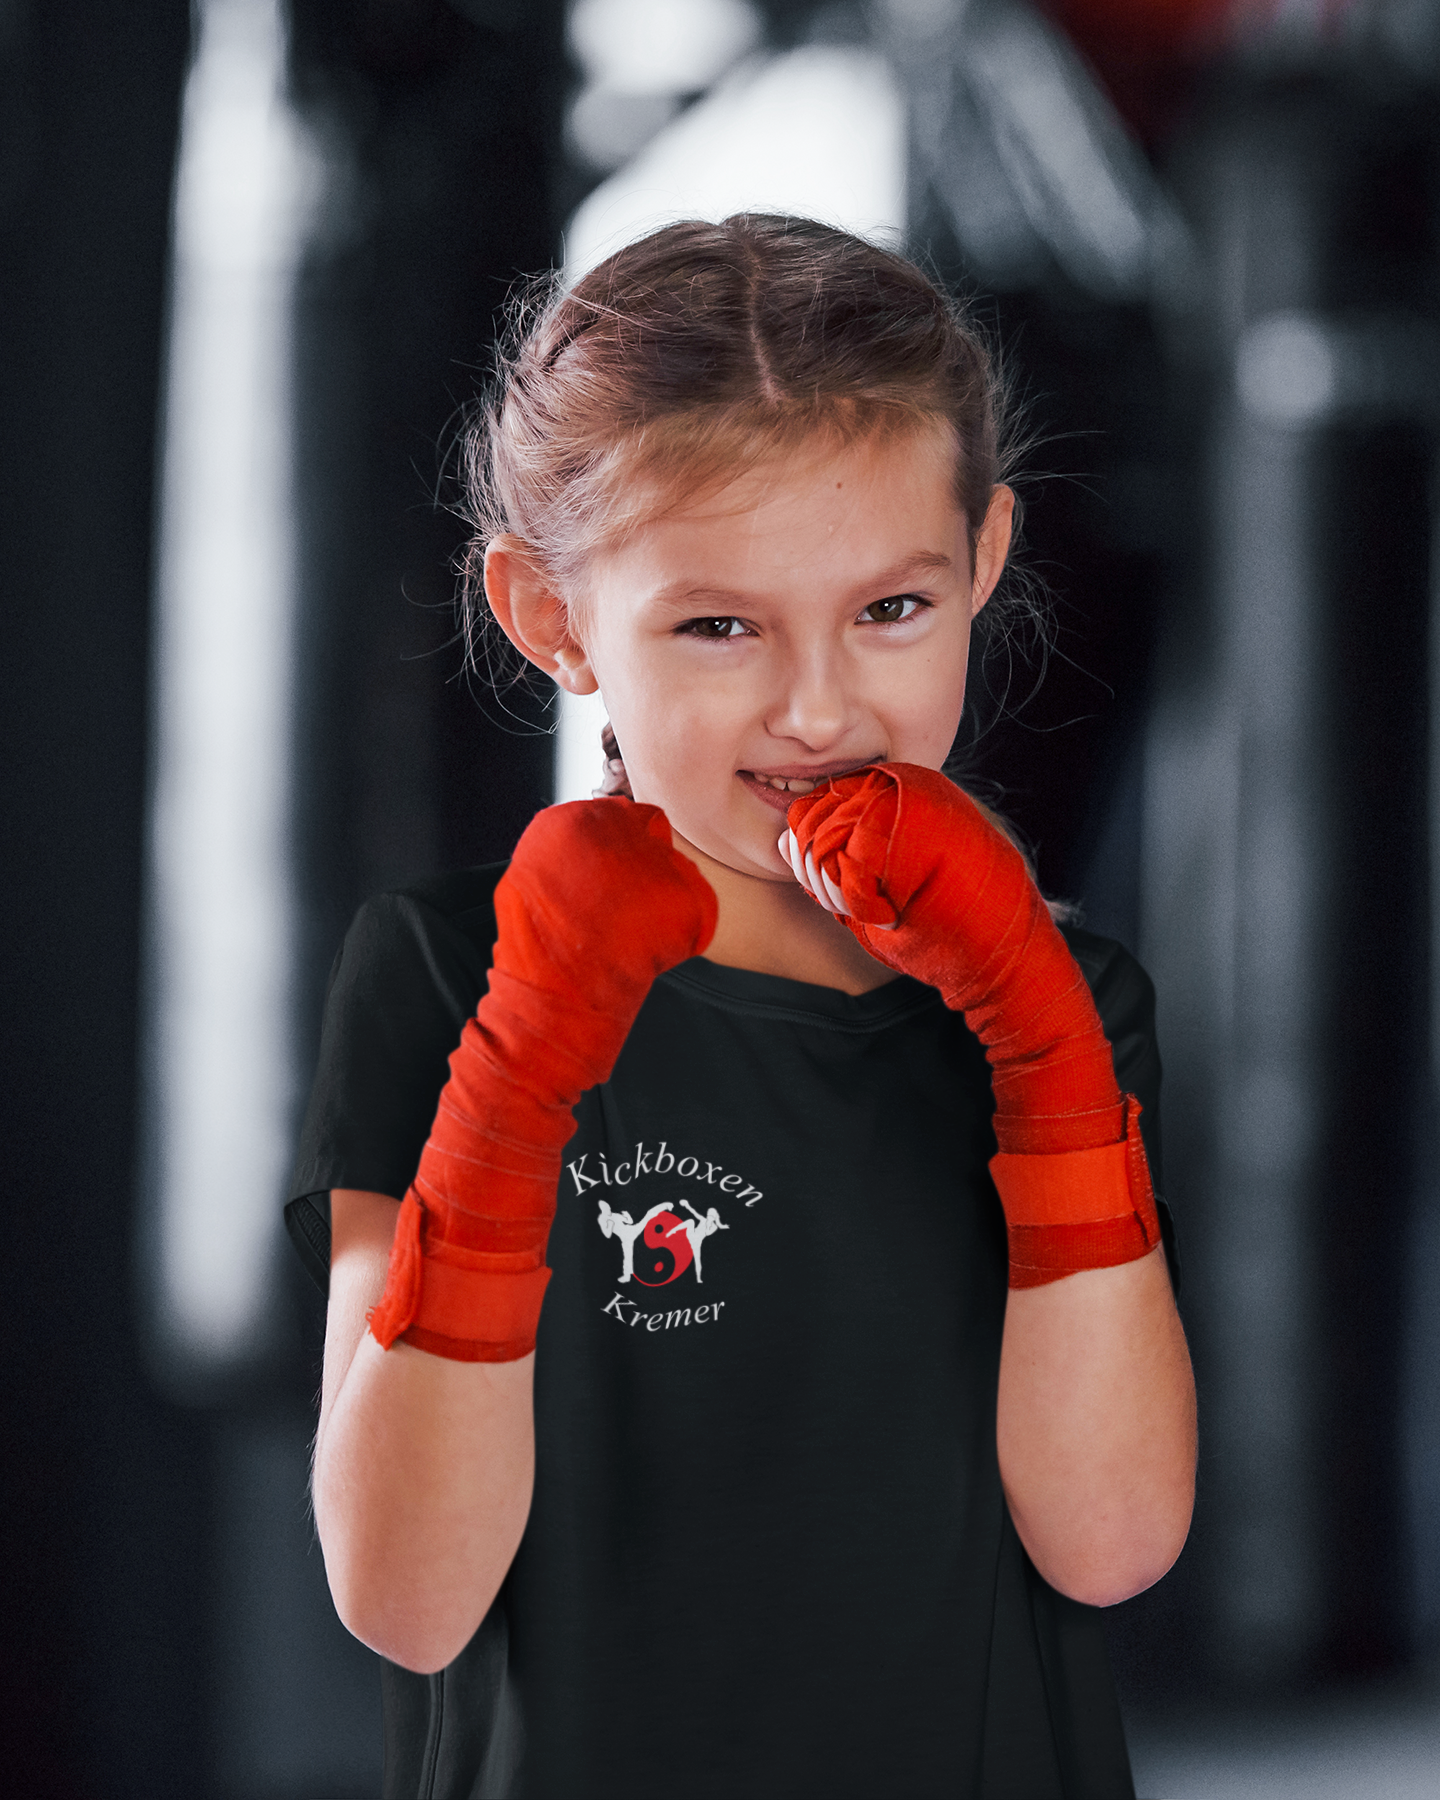 Kremer Kickboxen T-Shirt Kinder